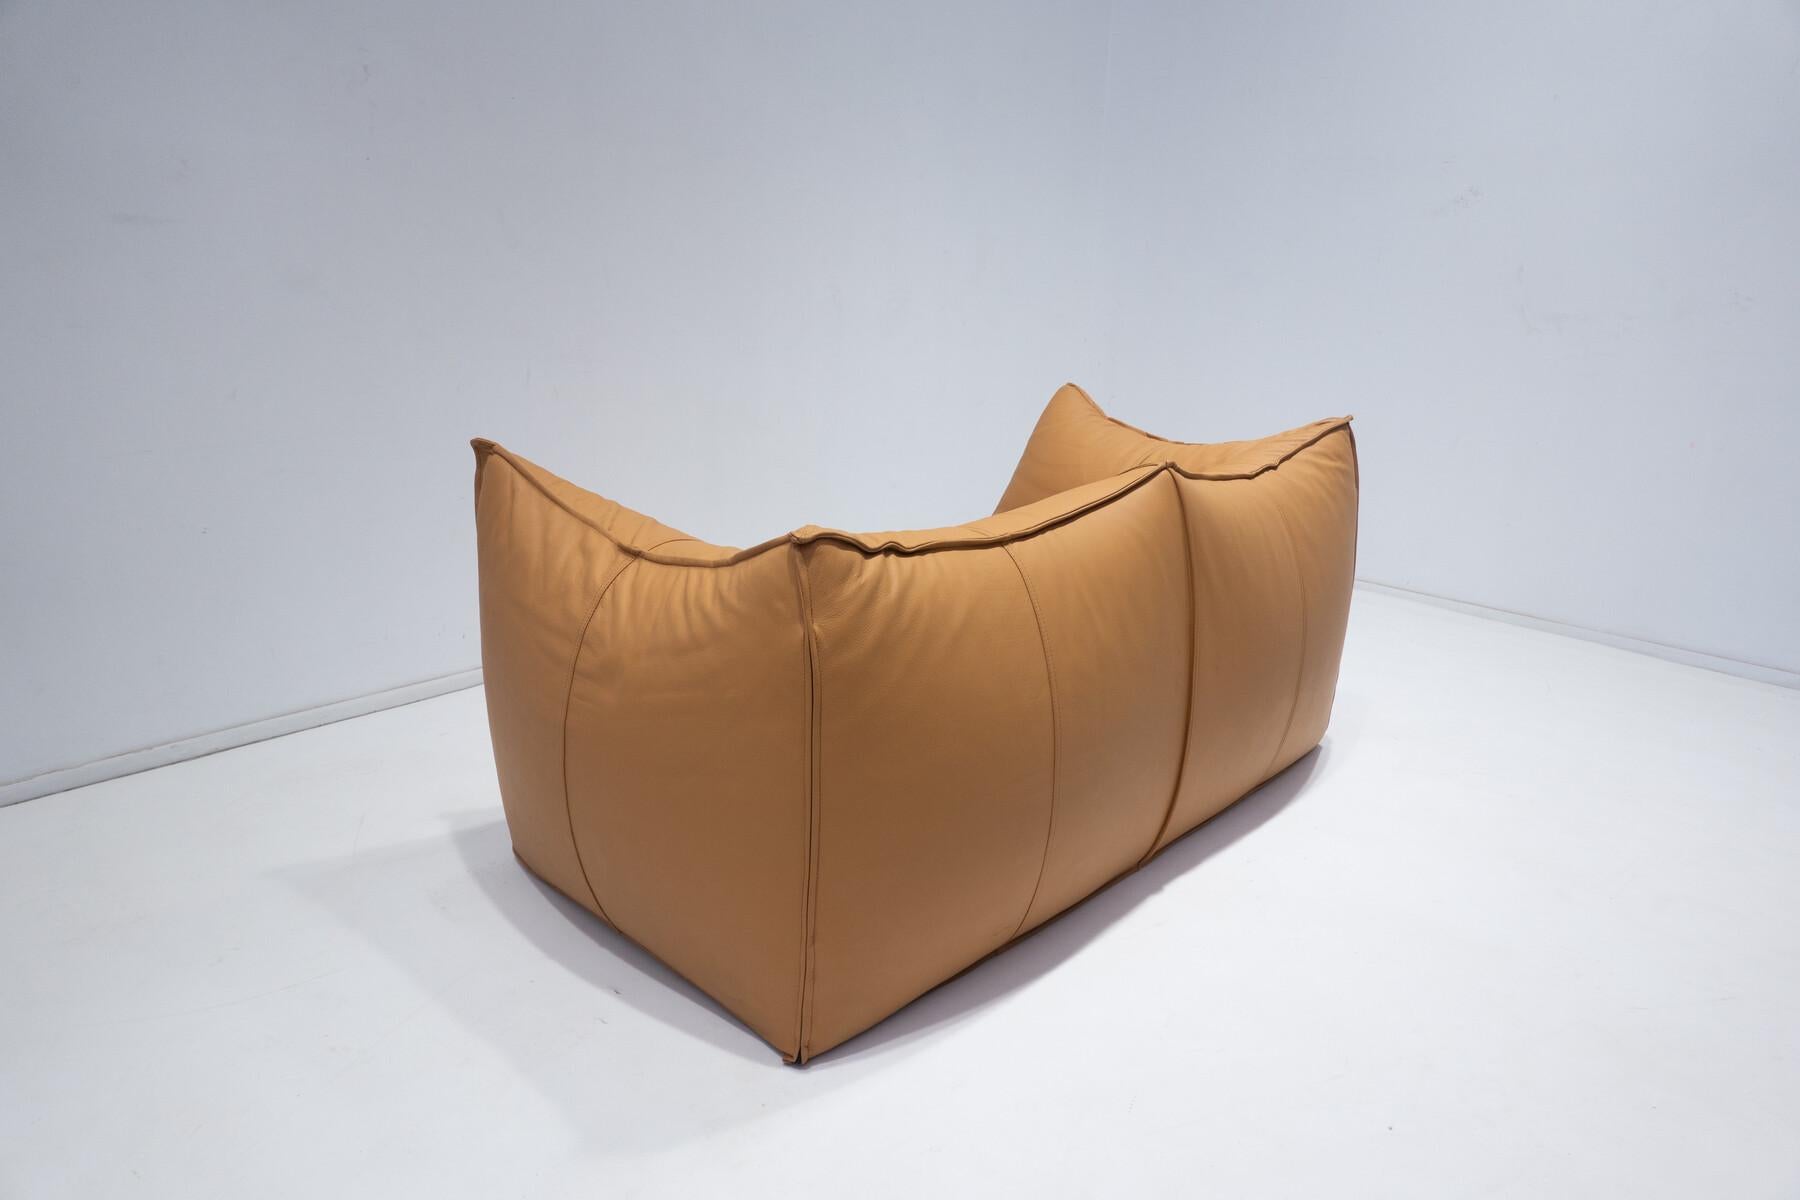 Late 20th Century Mid-Century Modern Bambole Sofa by Mario Bellini for B&B Italia, Cognac Leather For Sale